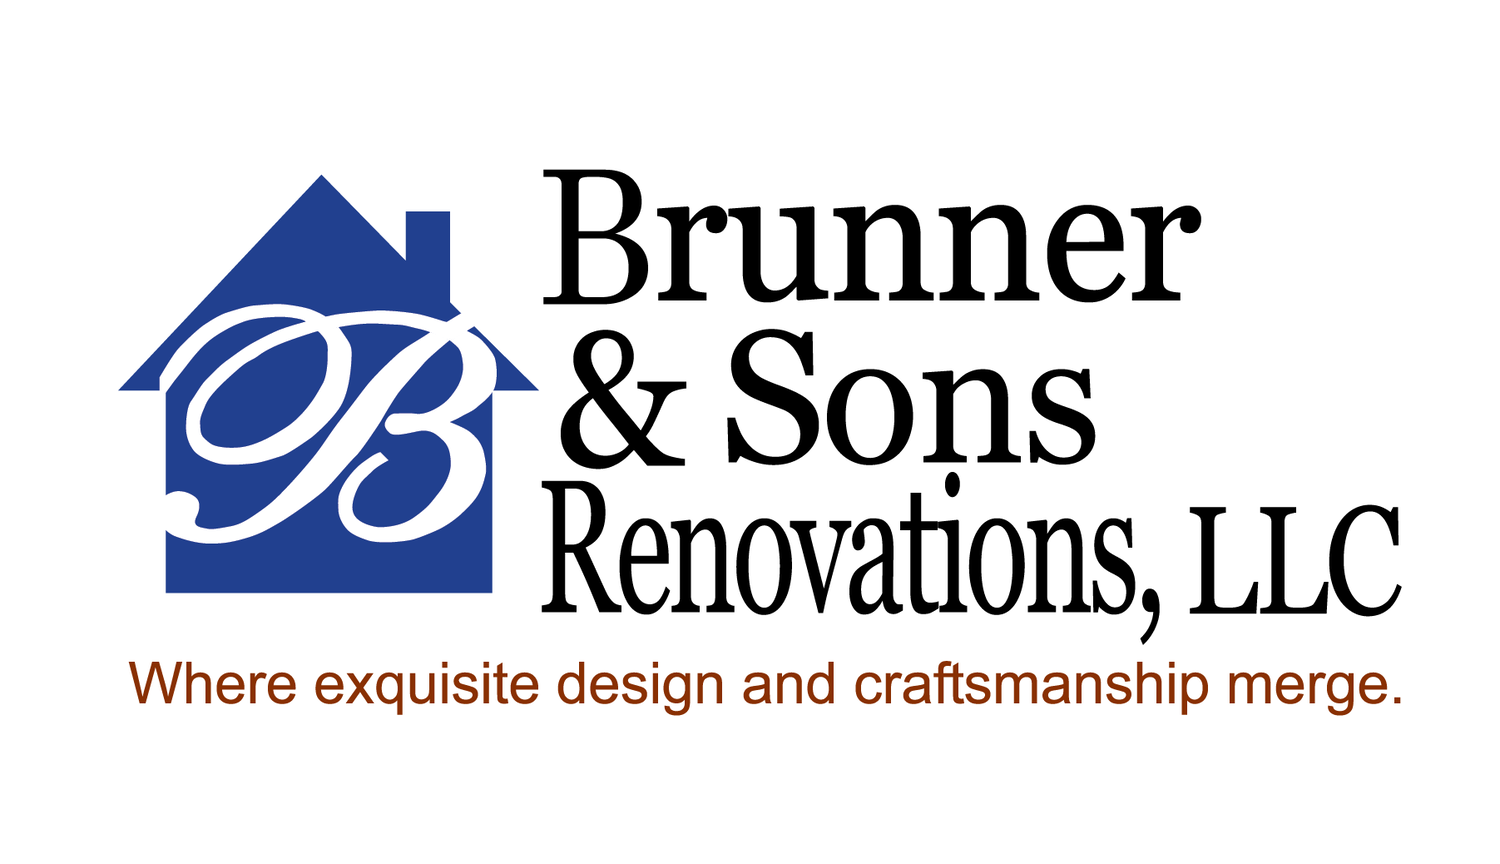 The Brunner Company